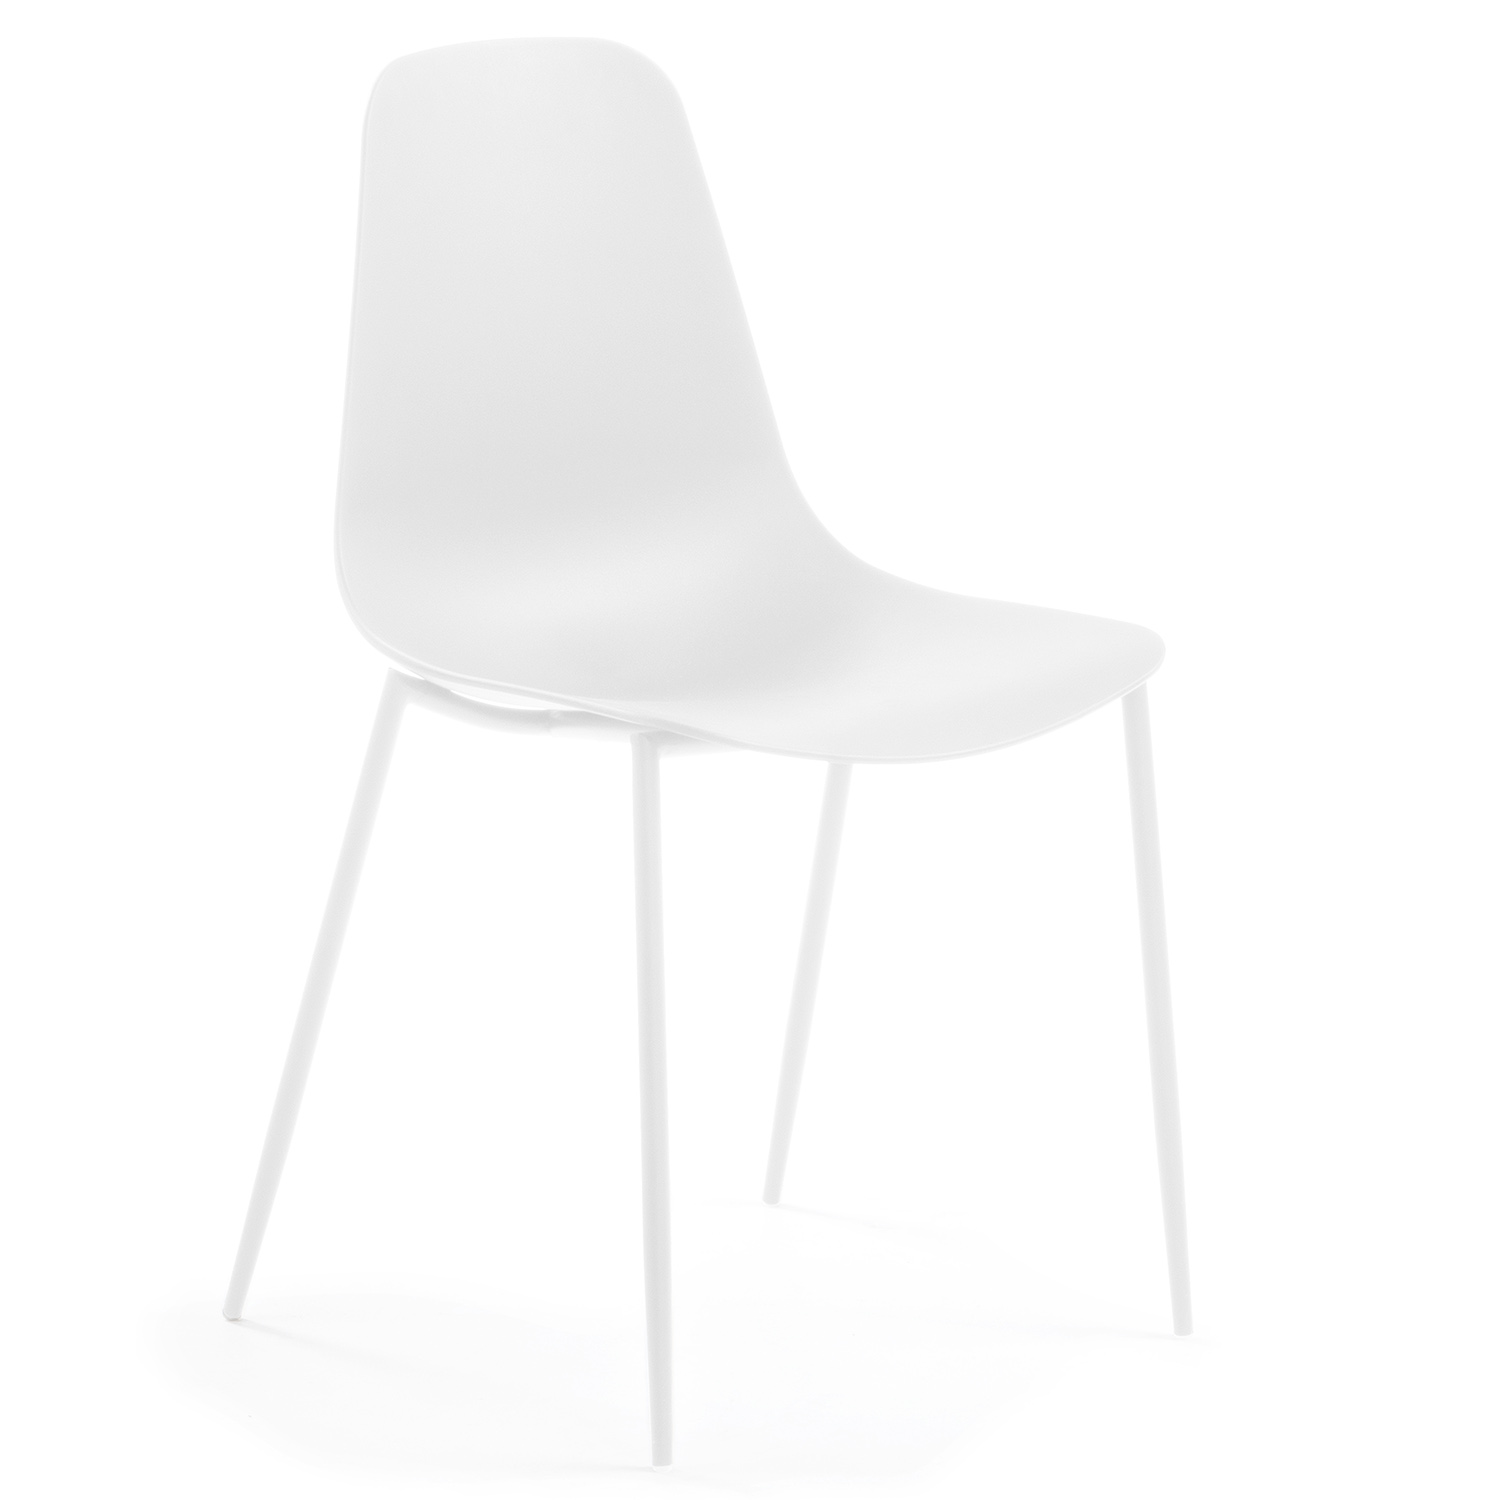 LAFORMA Wassu spisebordsstol  hvid plastik og stål